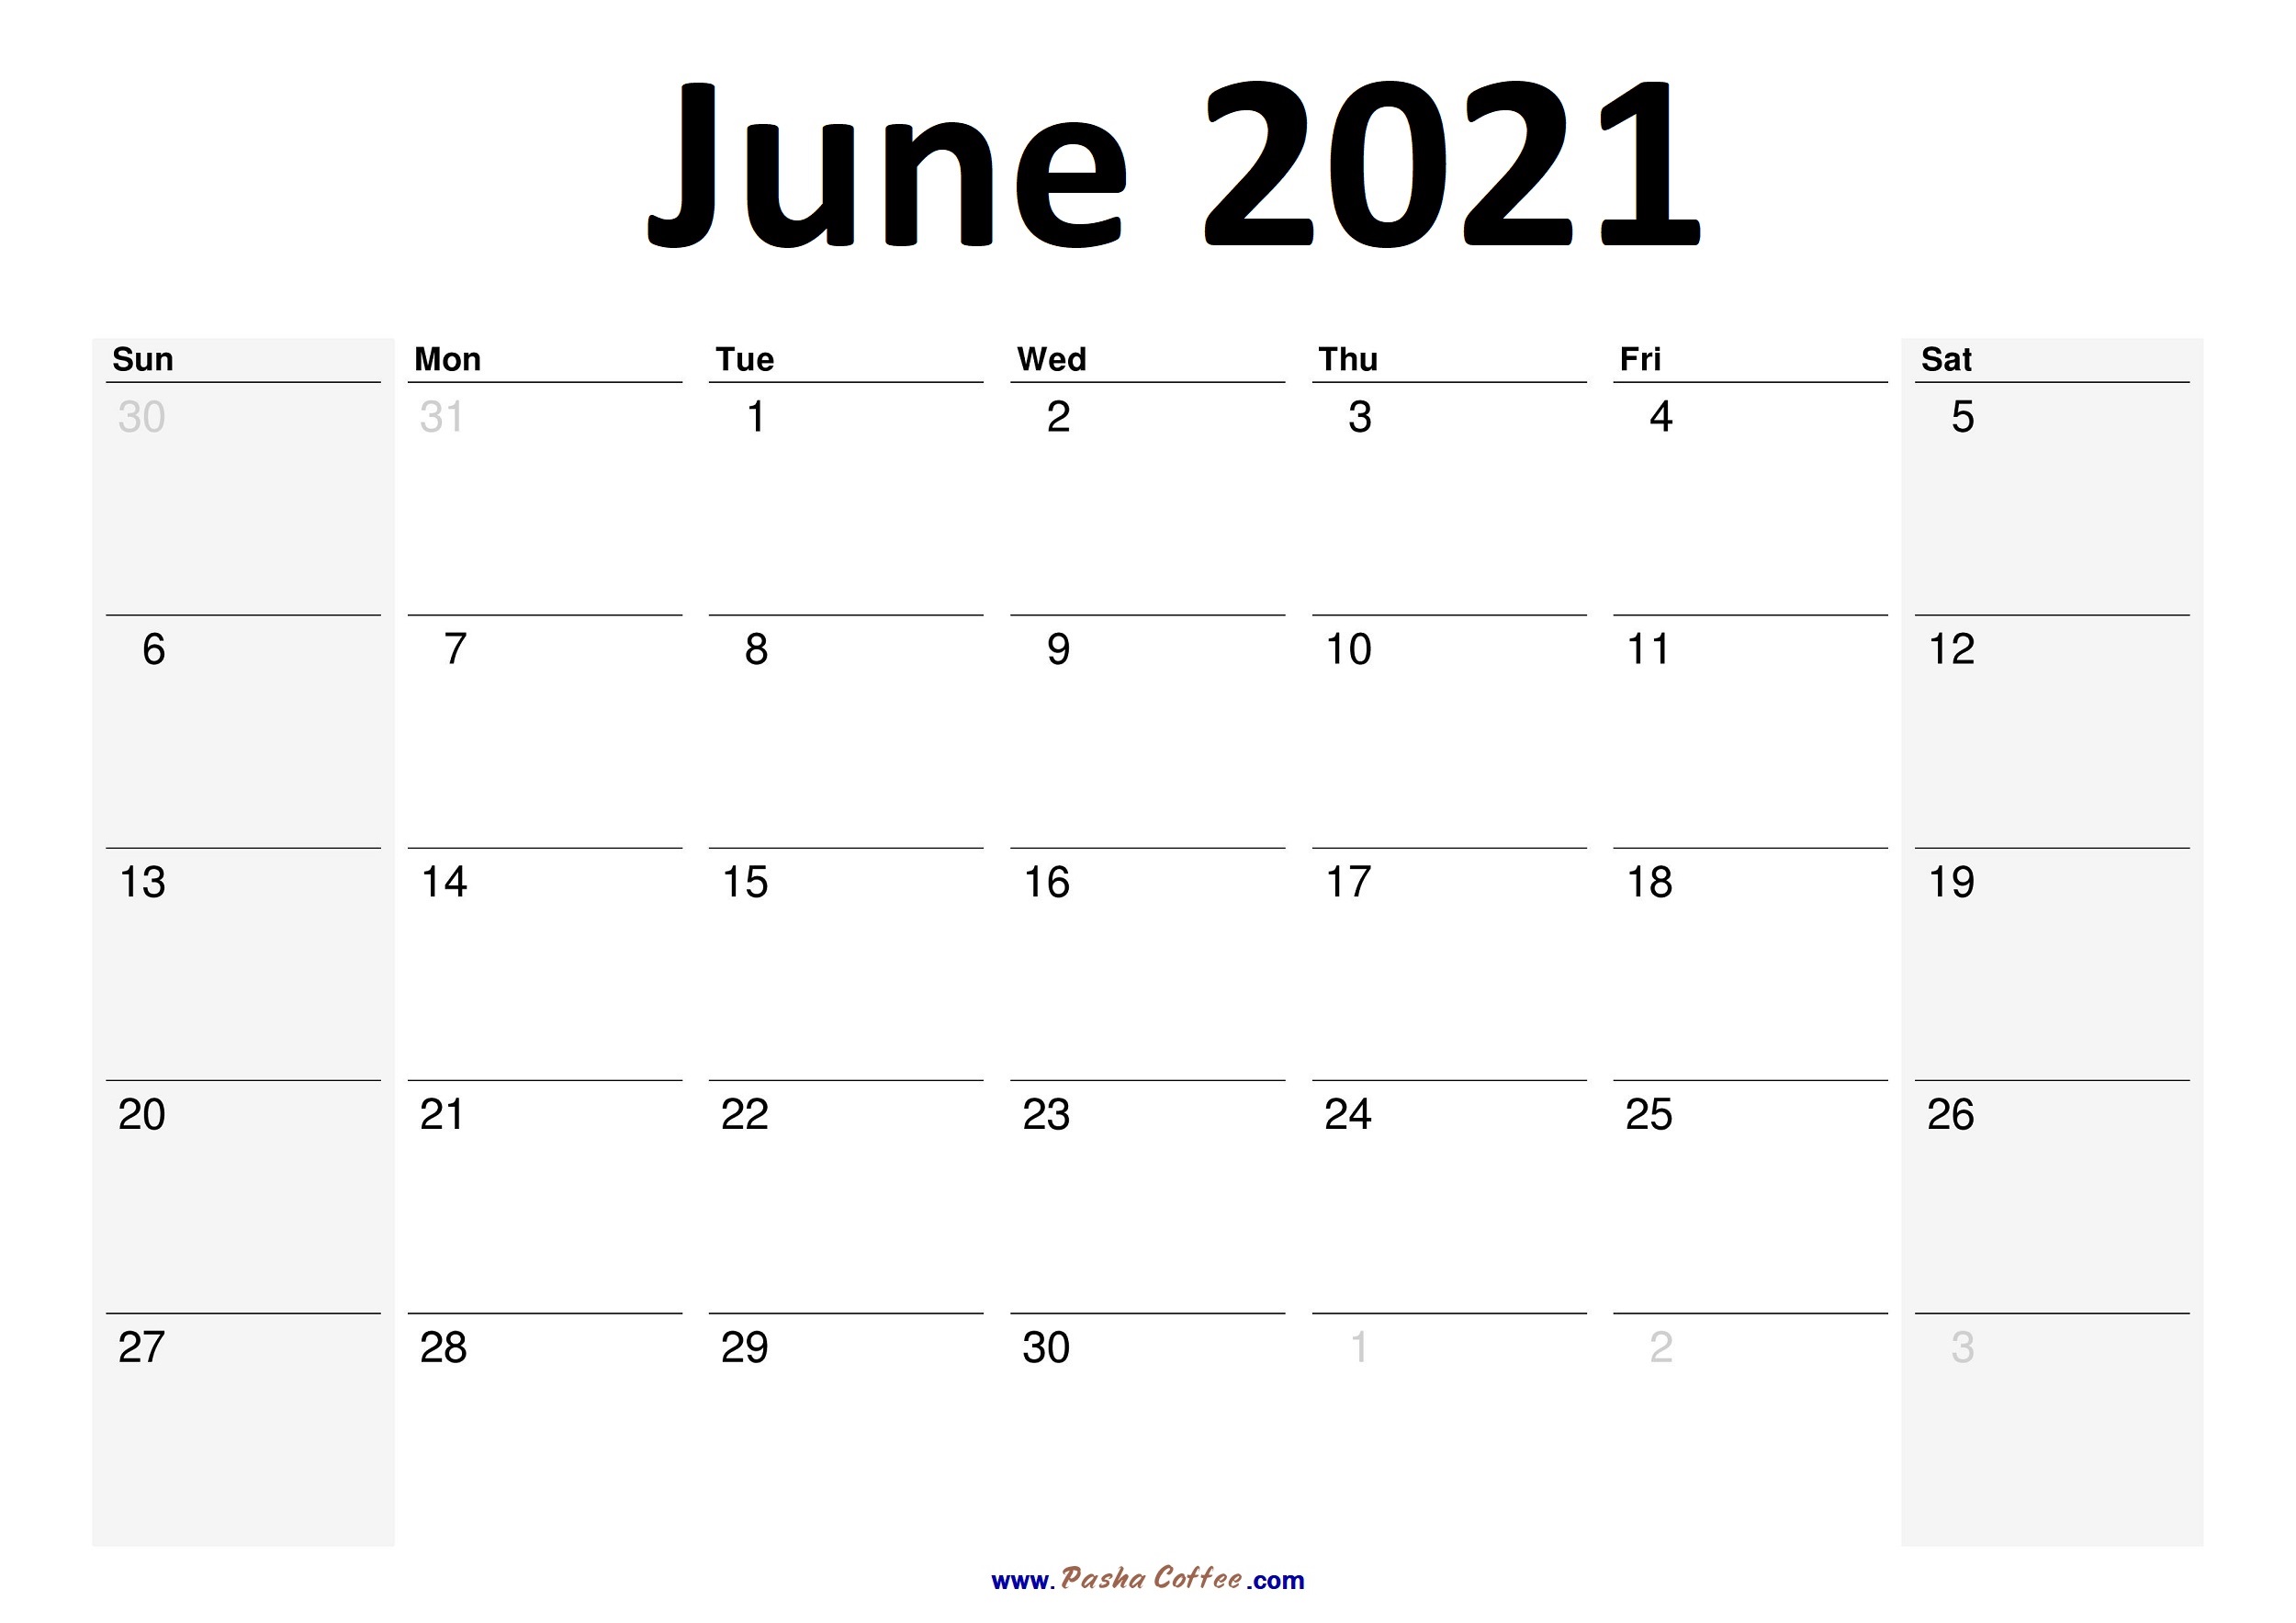 2021-June-Calendar-Planner01